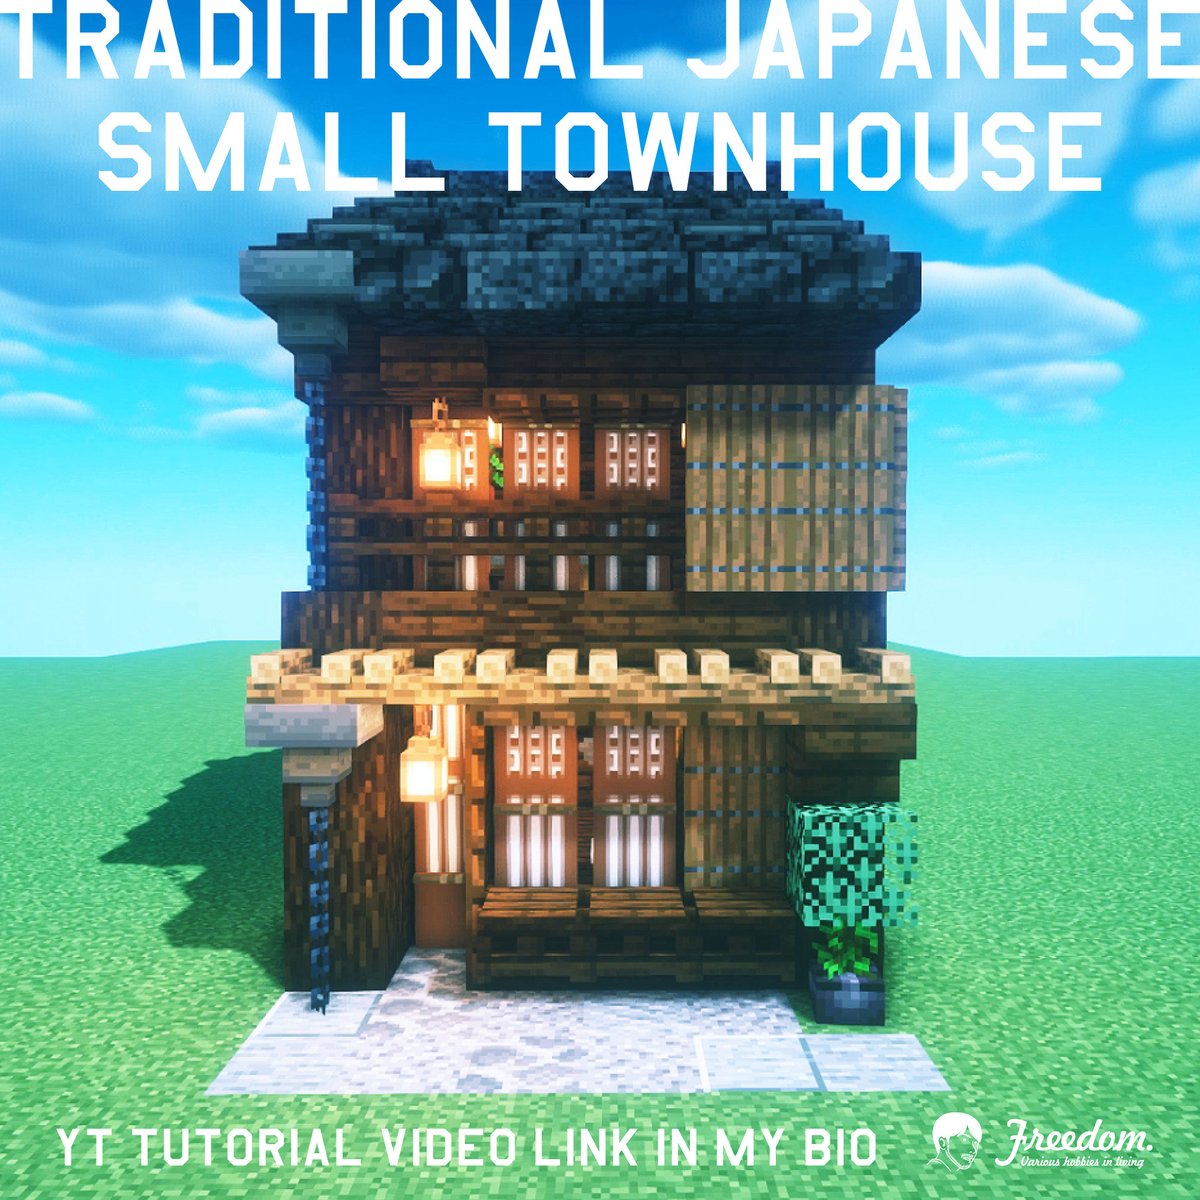 Freedom Japanese Traditional Small Townhouse Tutorial Video Up T Co D5elnfxdjm マインクラフト Minecraft Minecraft建築コミュ Minecraftbuild Architect Interior Tutorial 建築 バニラ建築学部 Vanilla Shop 和風建築